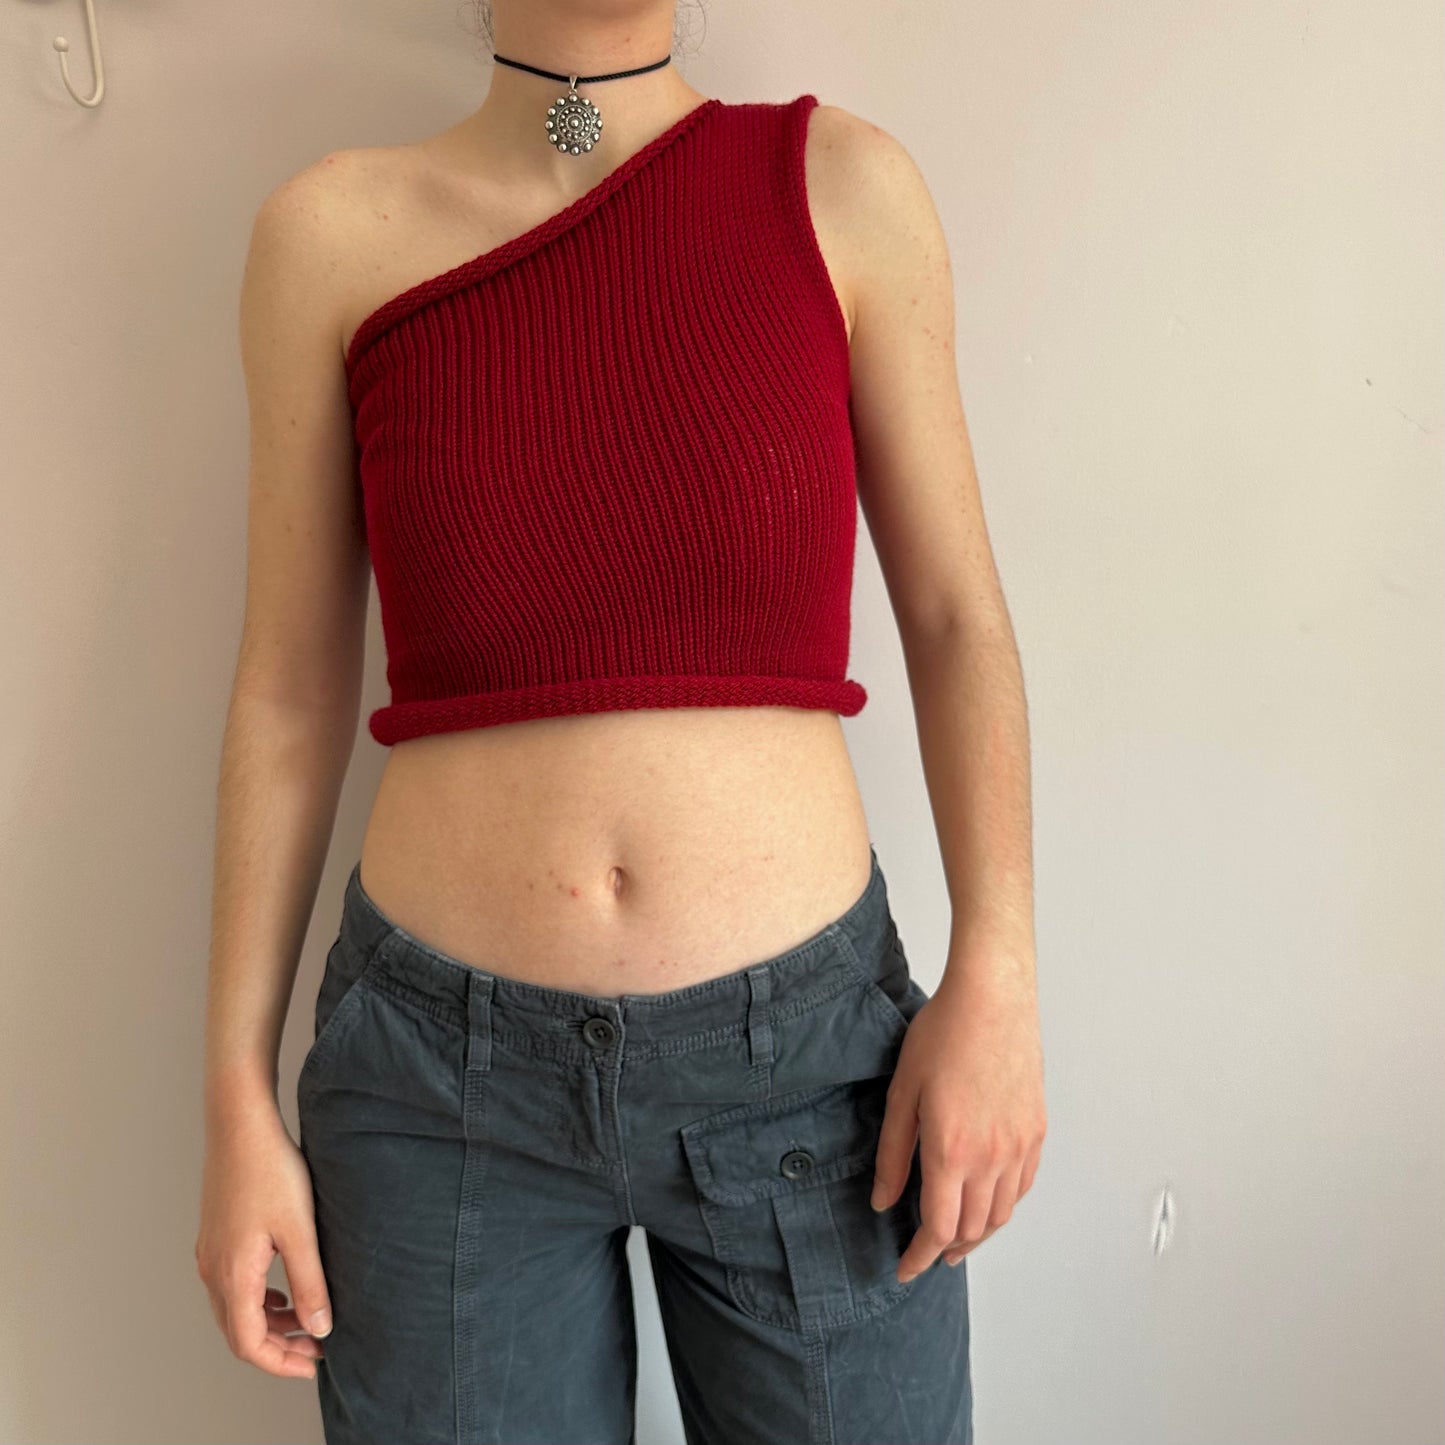 Handmade knitted dark red asymmetrical one shoulder top